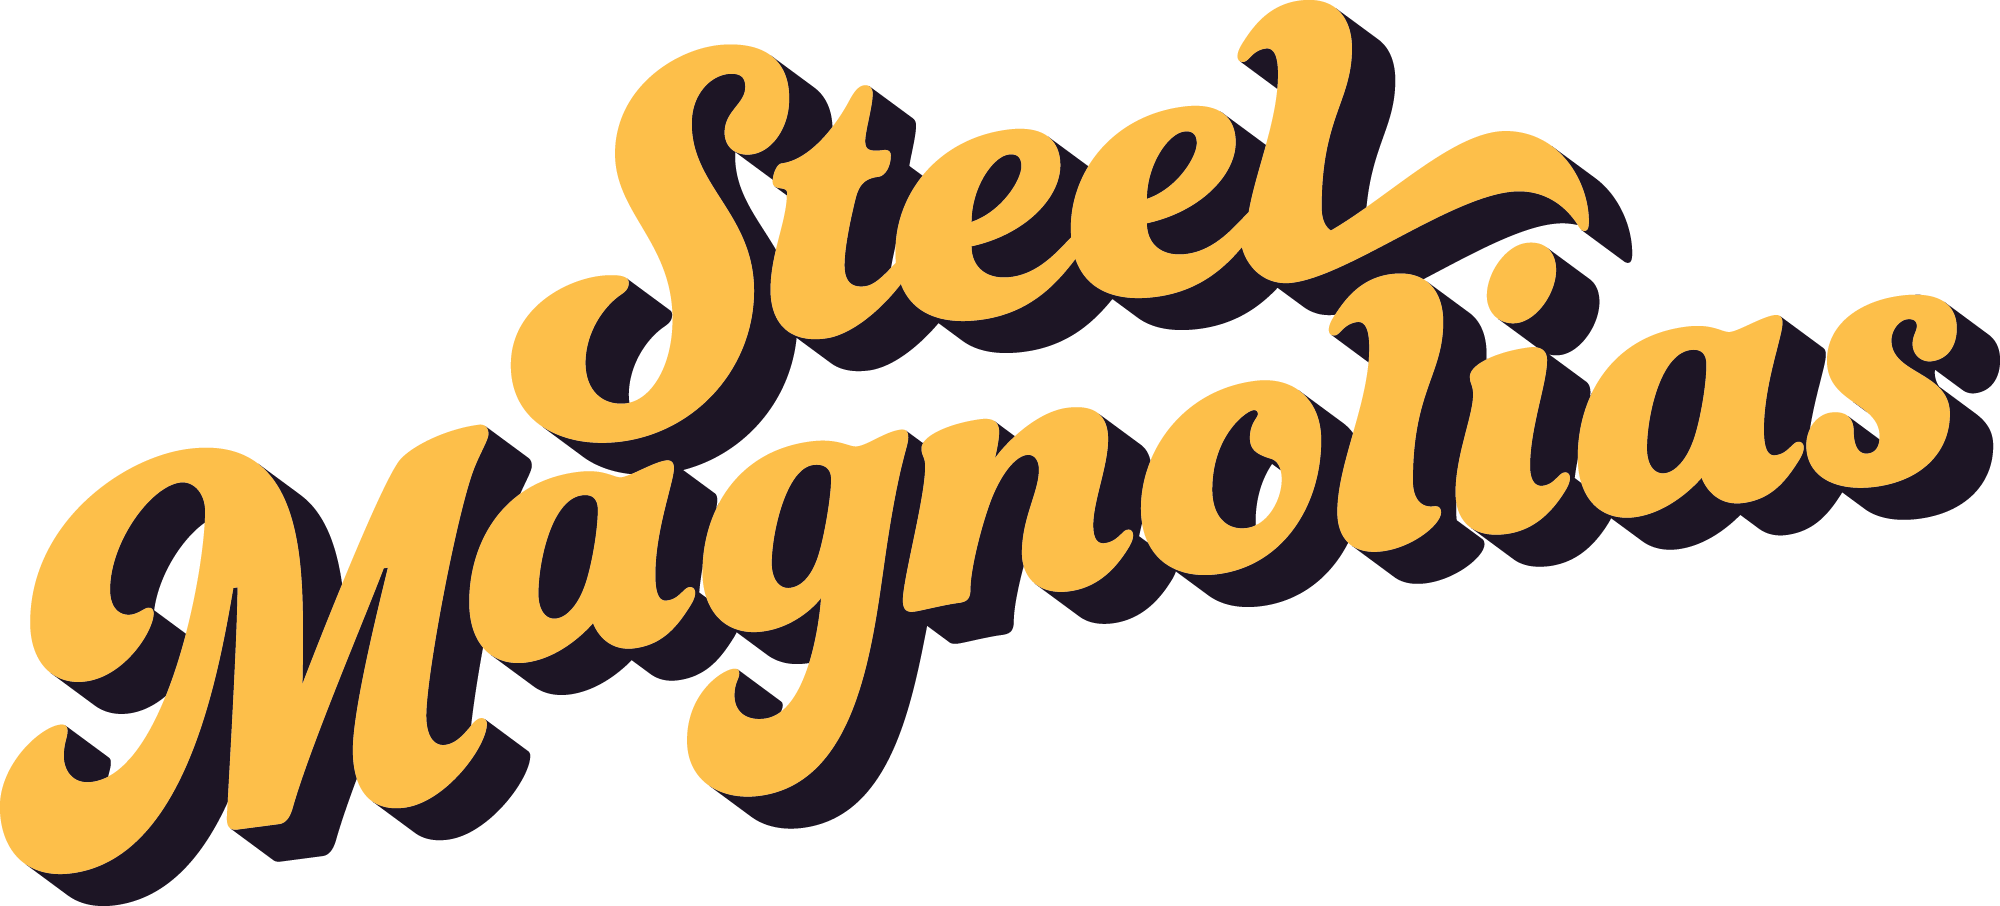 Steel Magnolias Wordmark